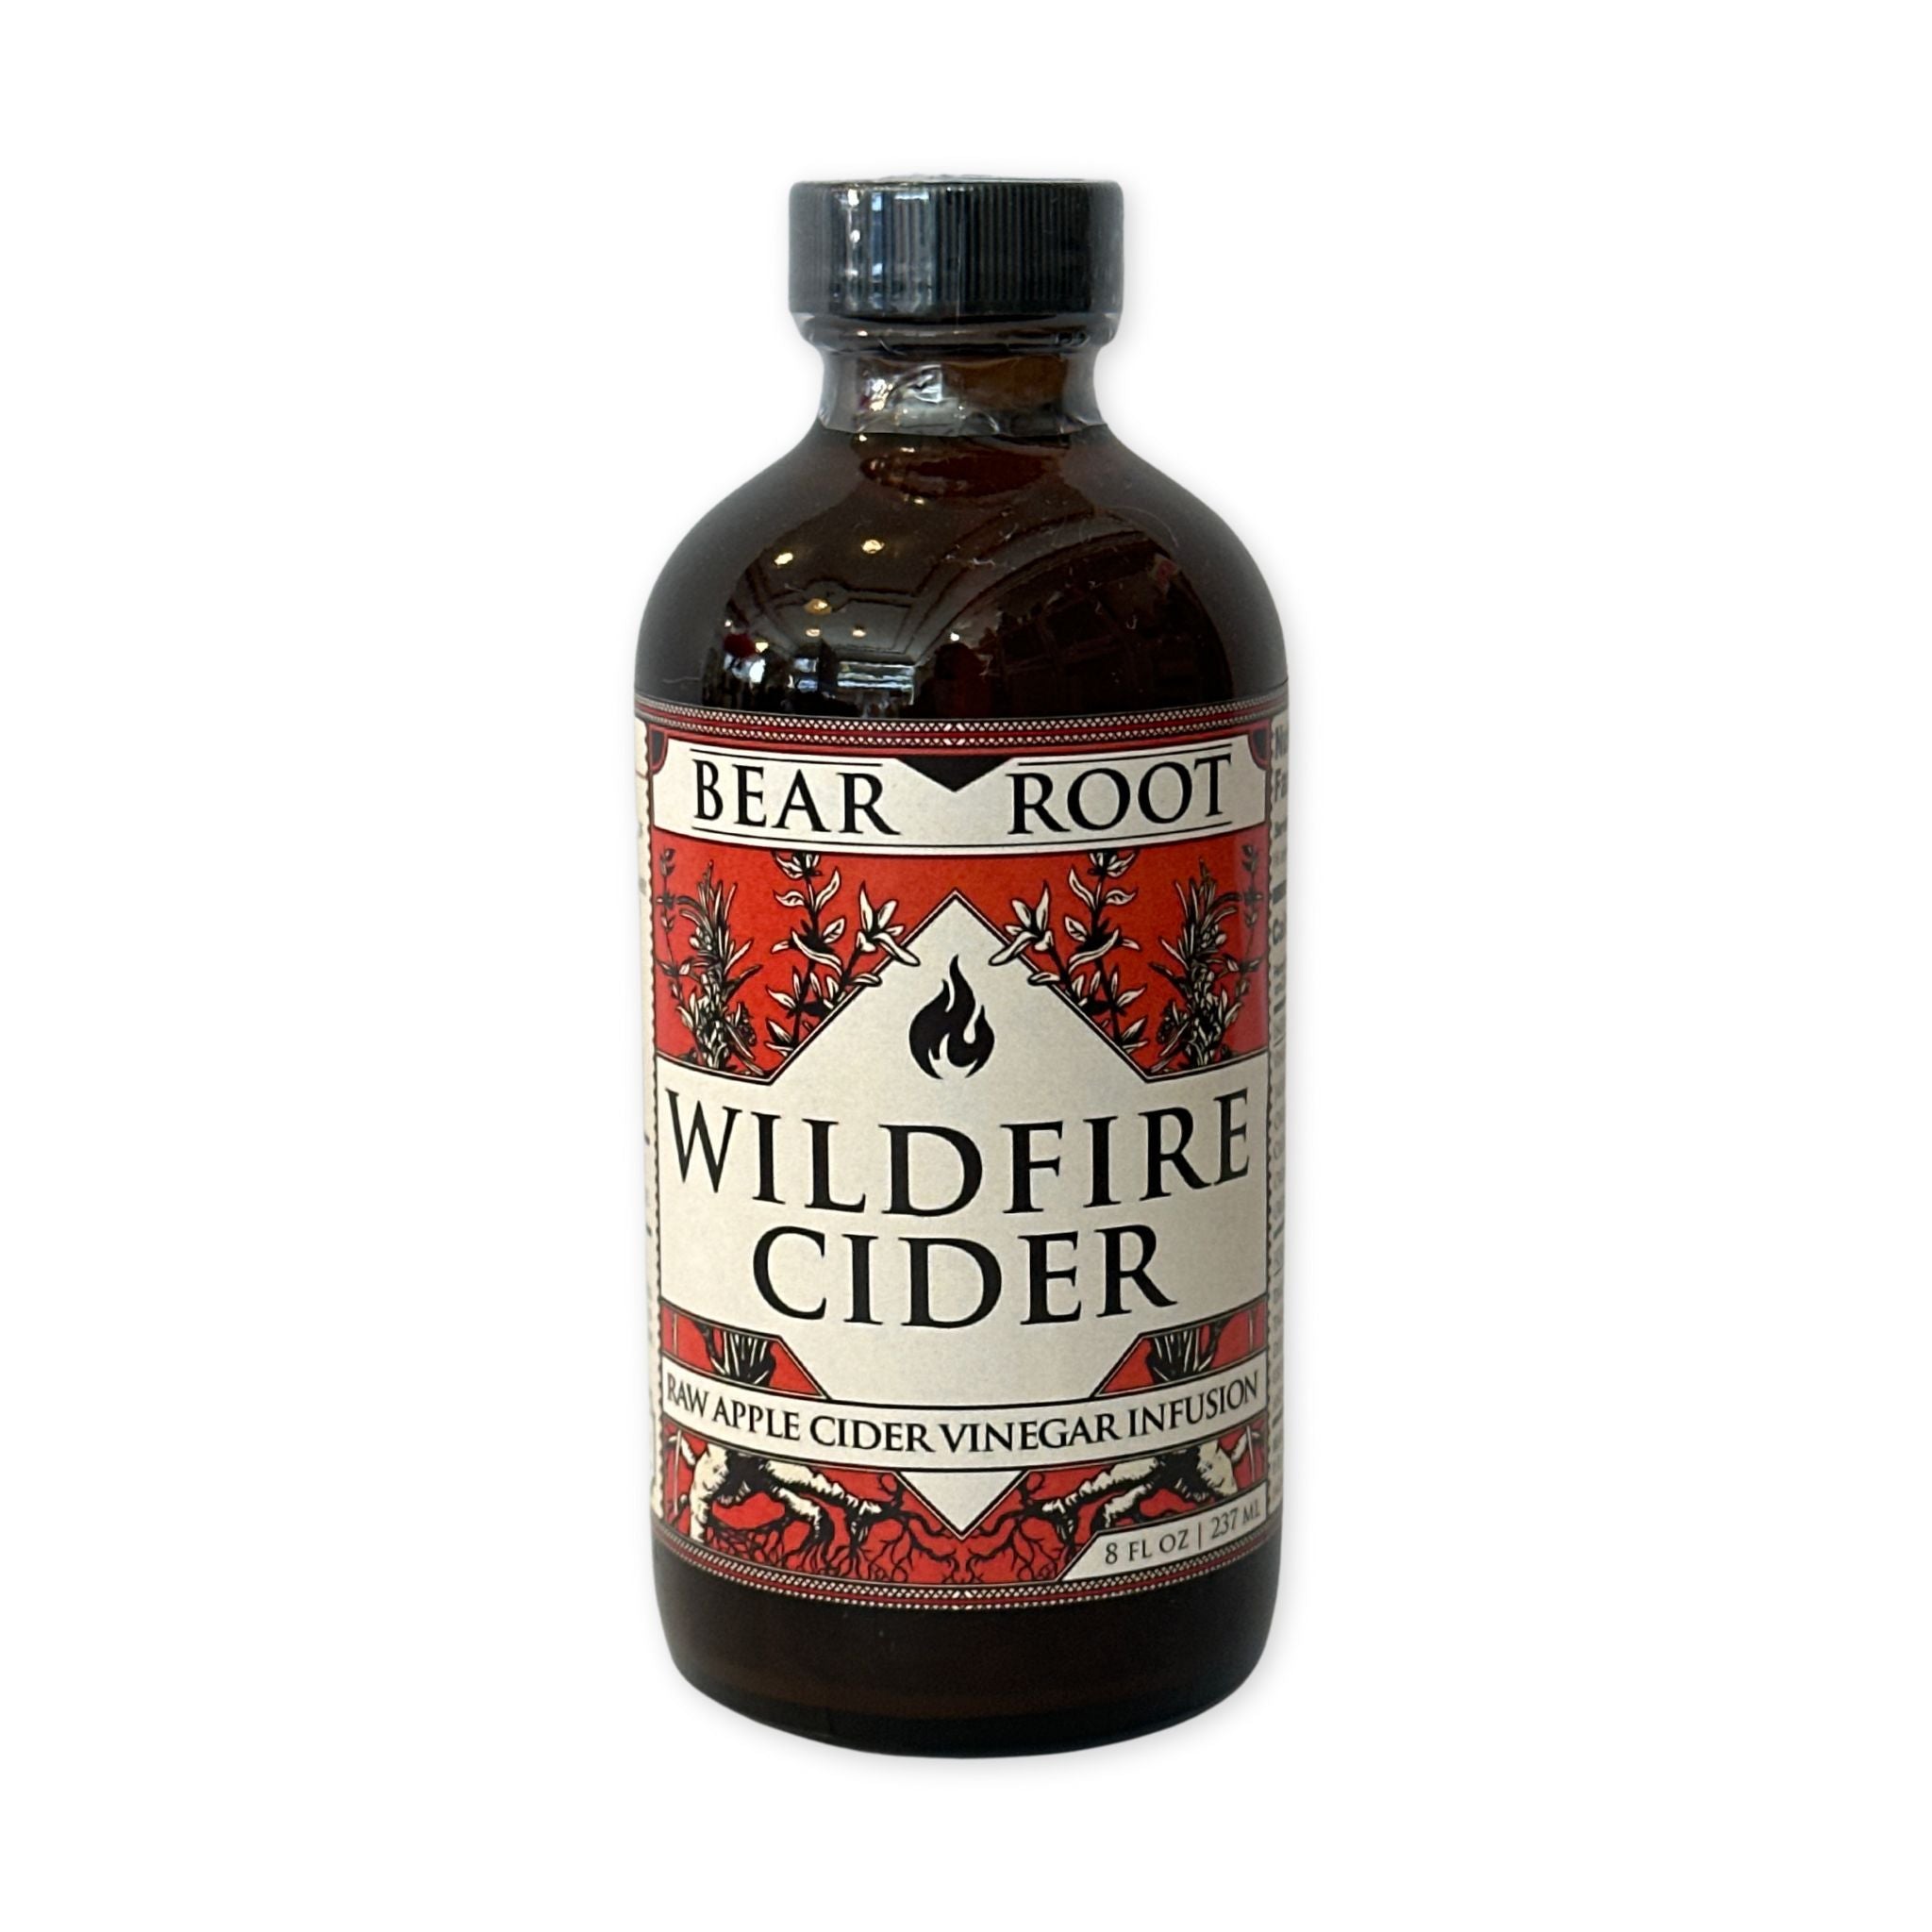 Wildfire Cider